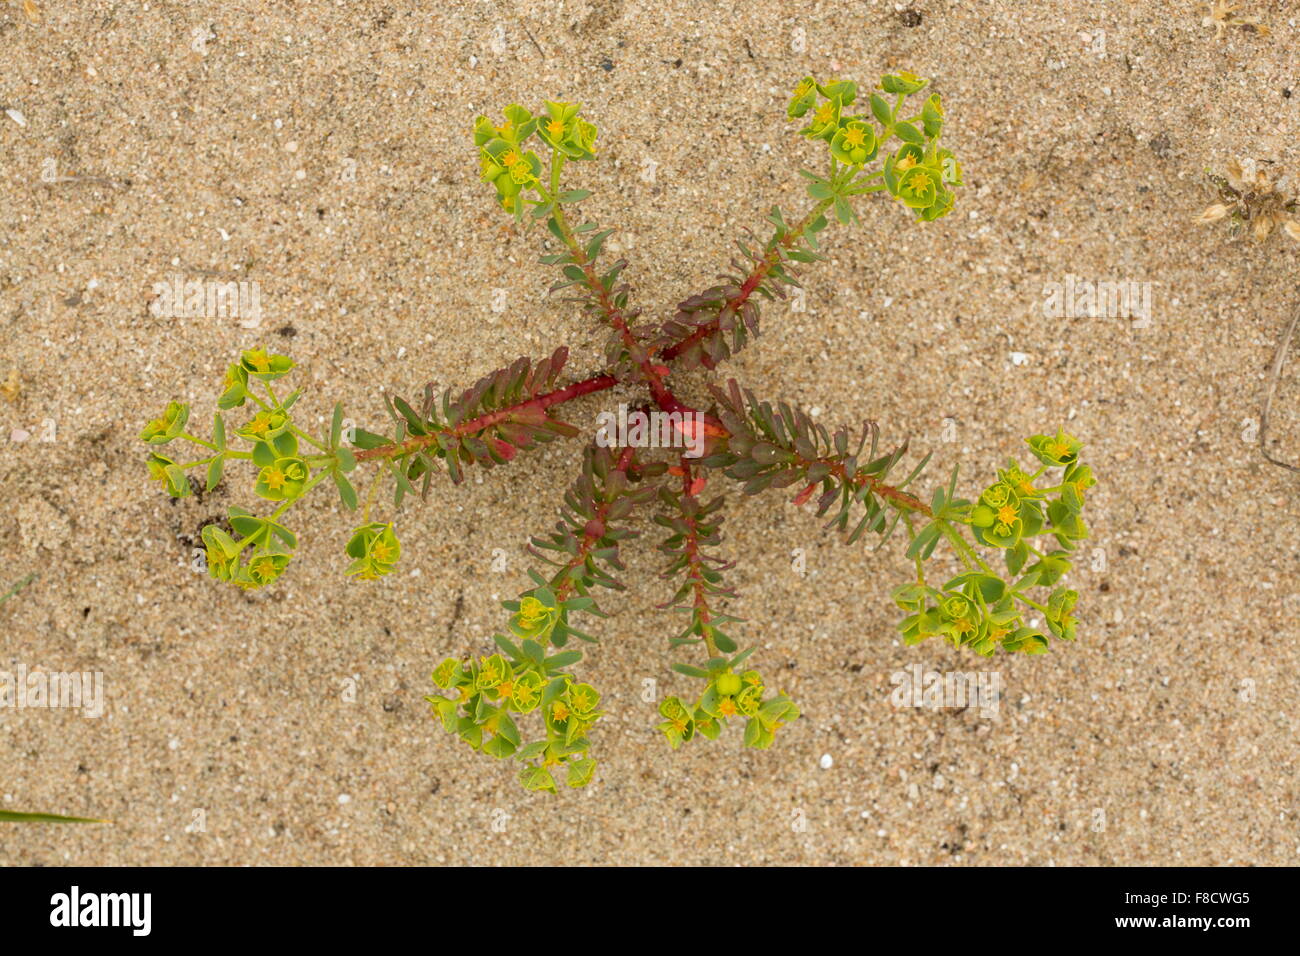 Portland Spurge, Euphorbia portlandica, prostrate on sand-dunes. Stock Photo